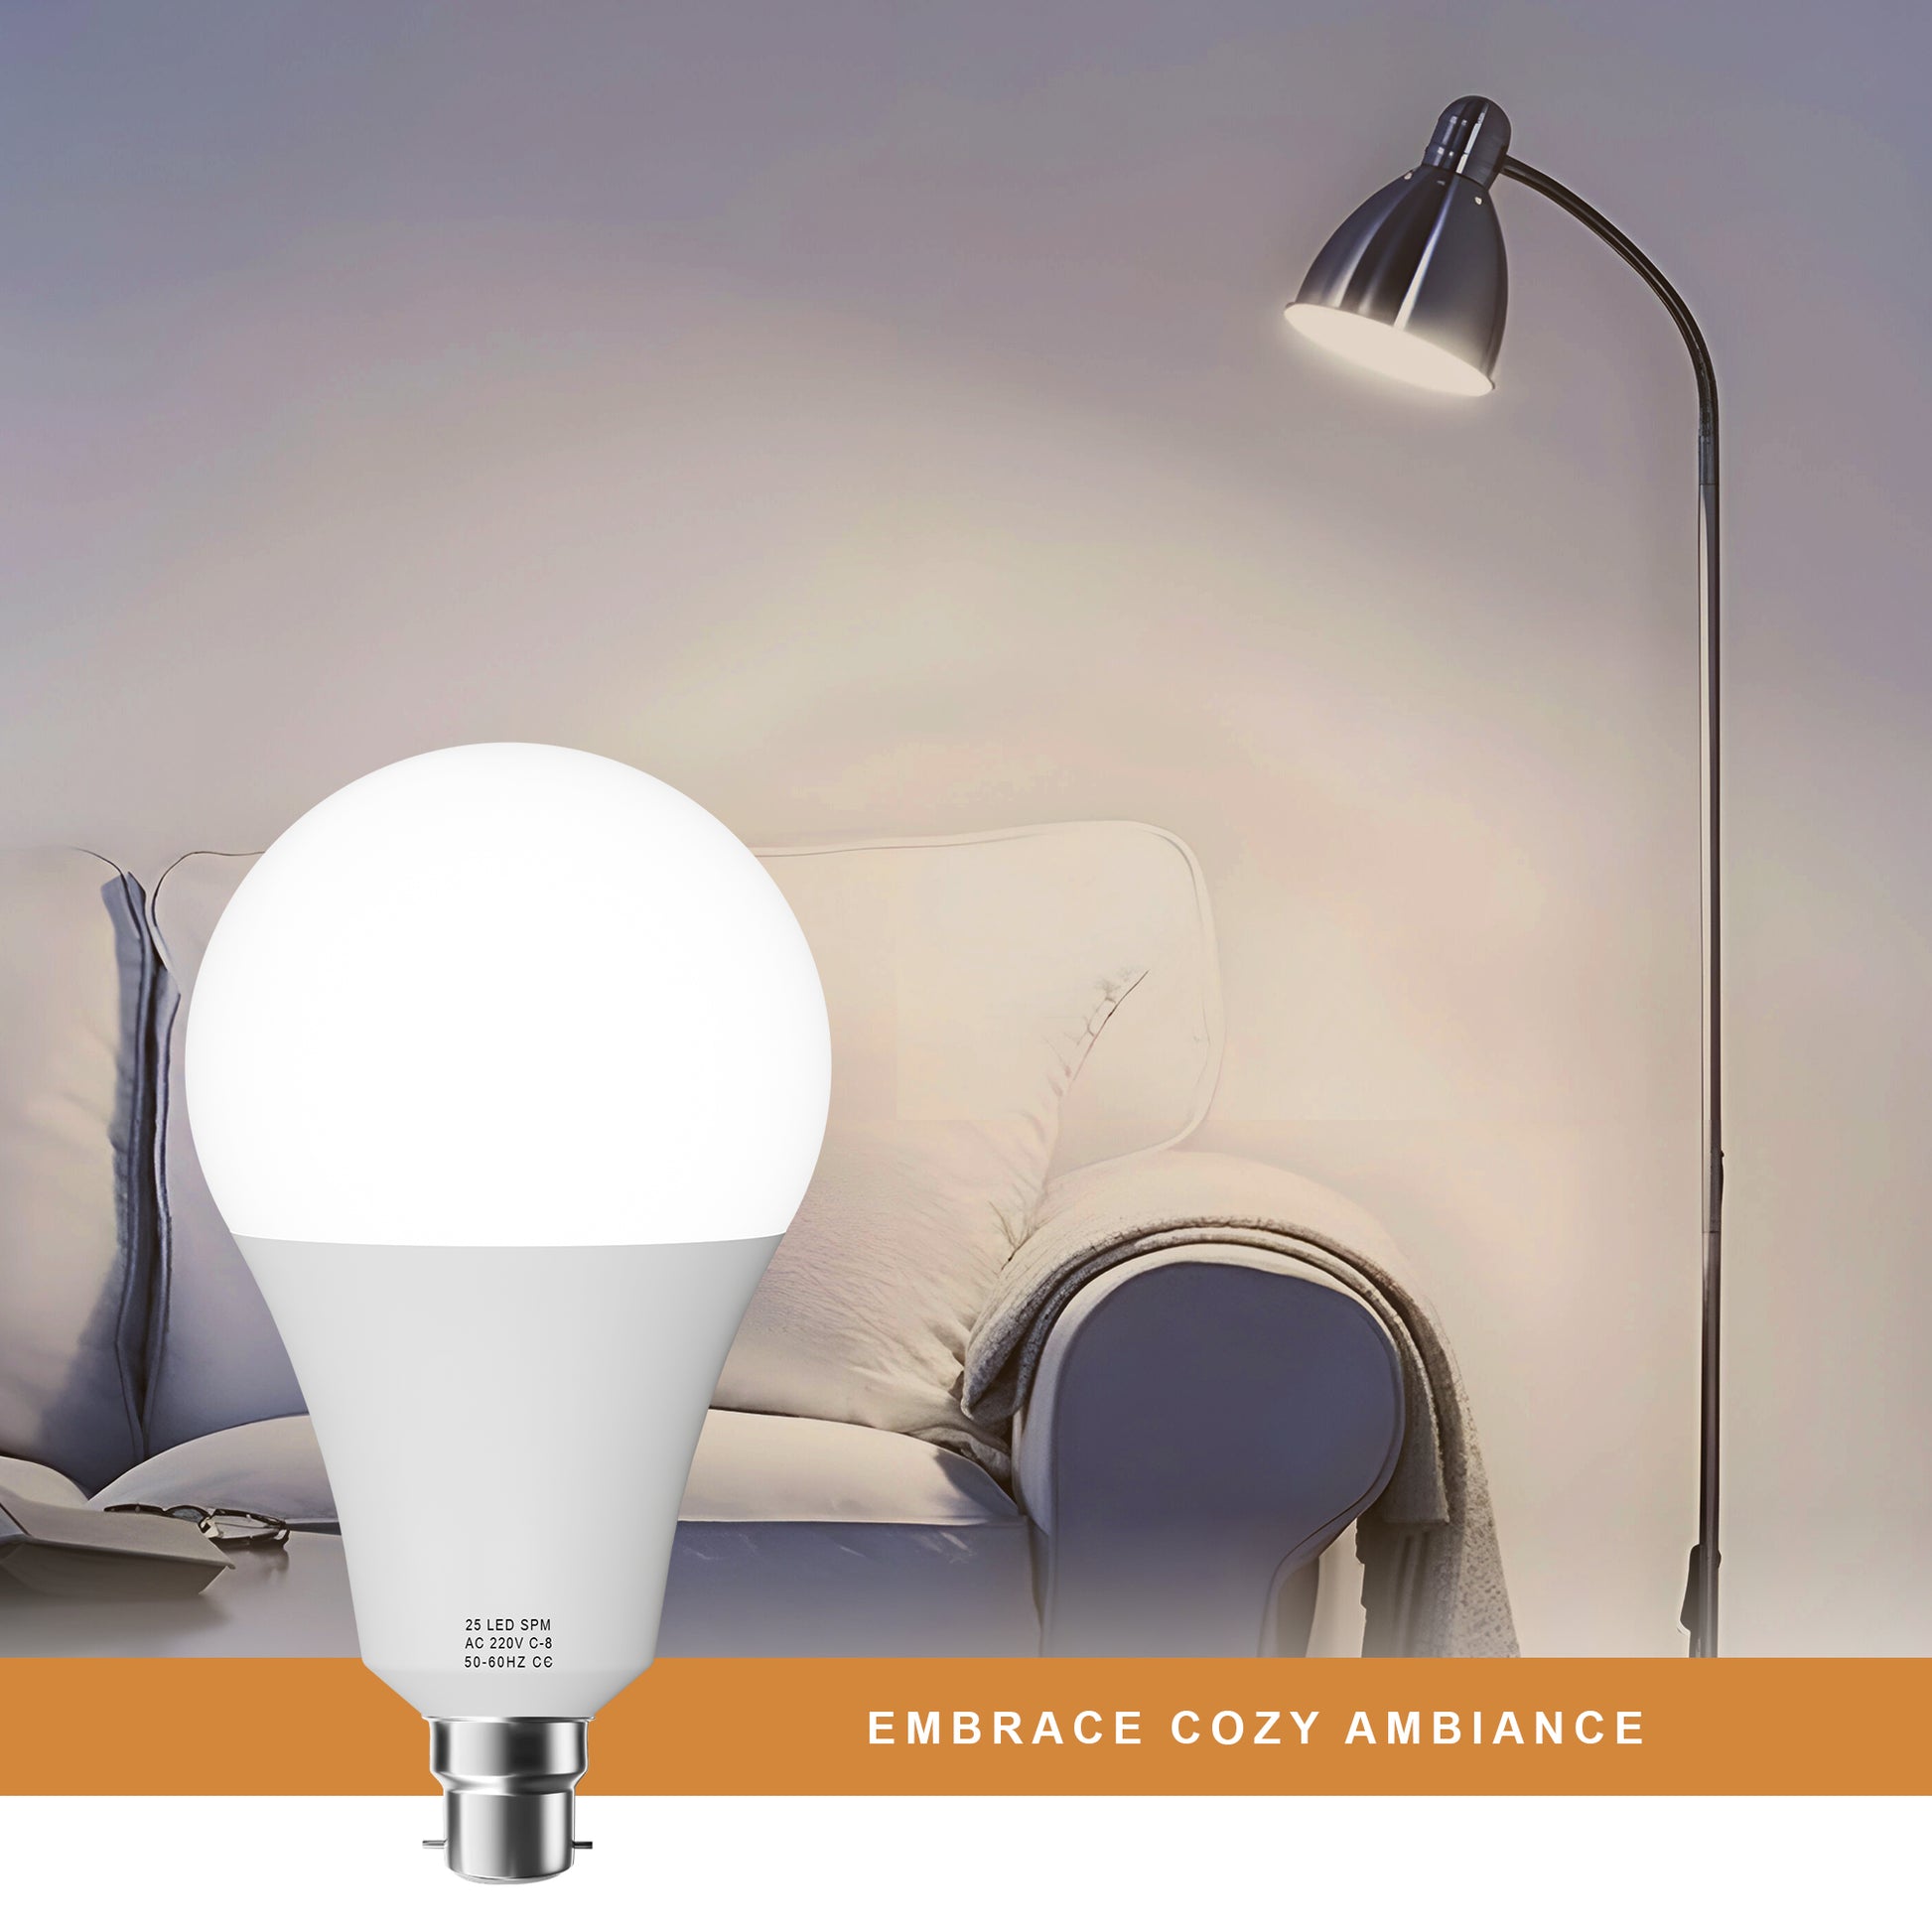 Energy-efficient LED light bulb